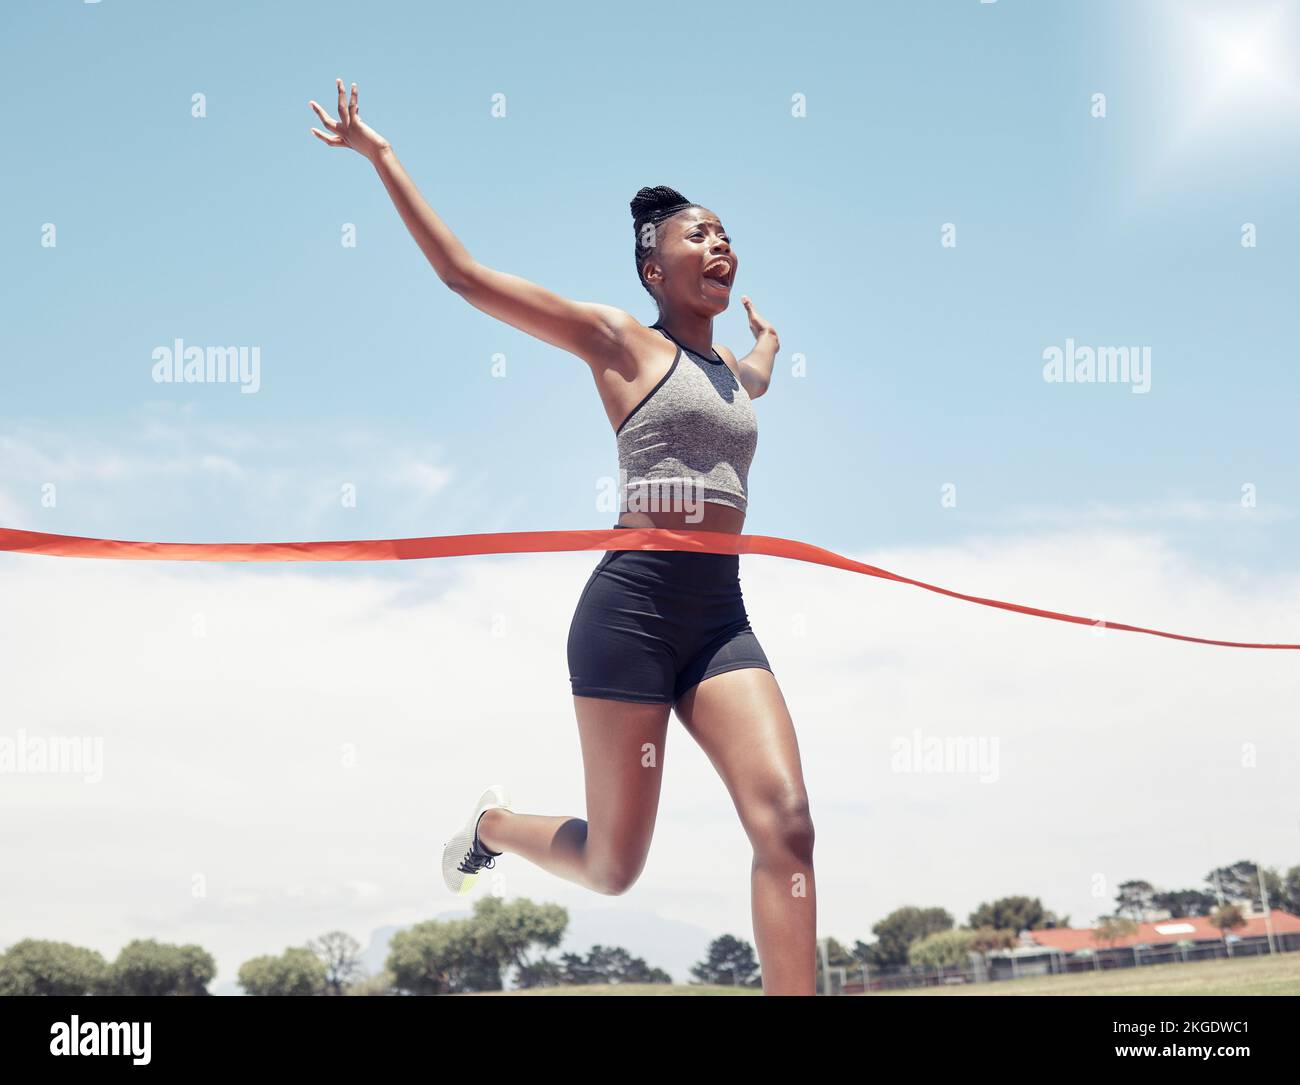 Fitness, runner winner or black woman at finish line for victory, celebration or sport exercise at stadium. Health, winning or running girl for sport Stock Photo